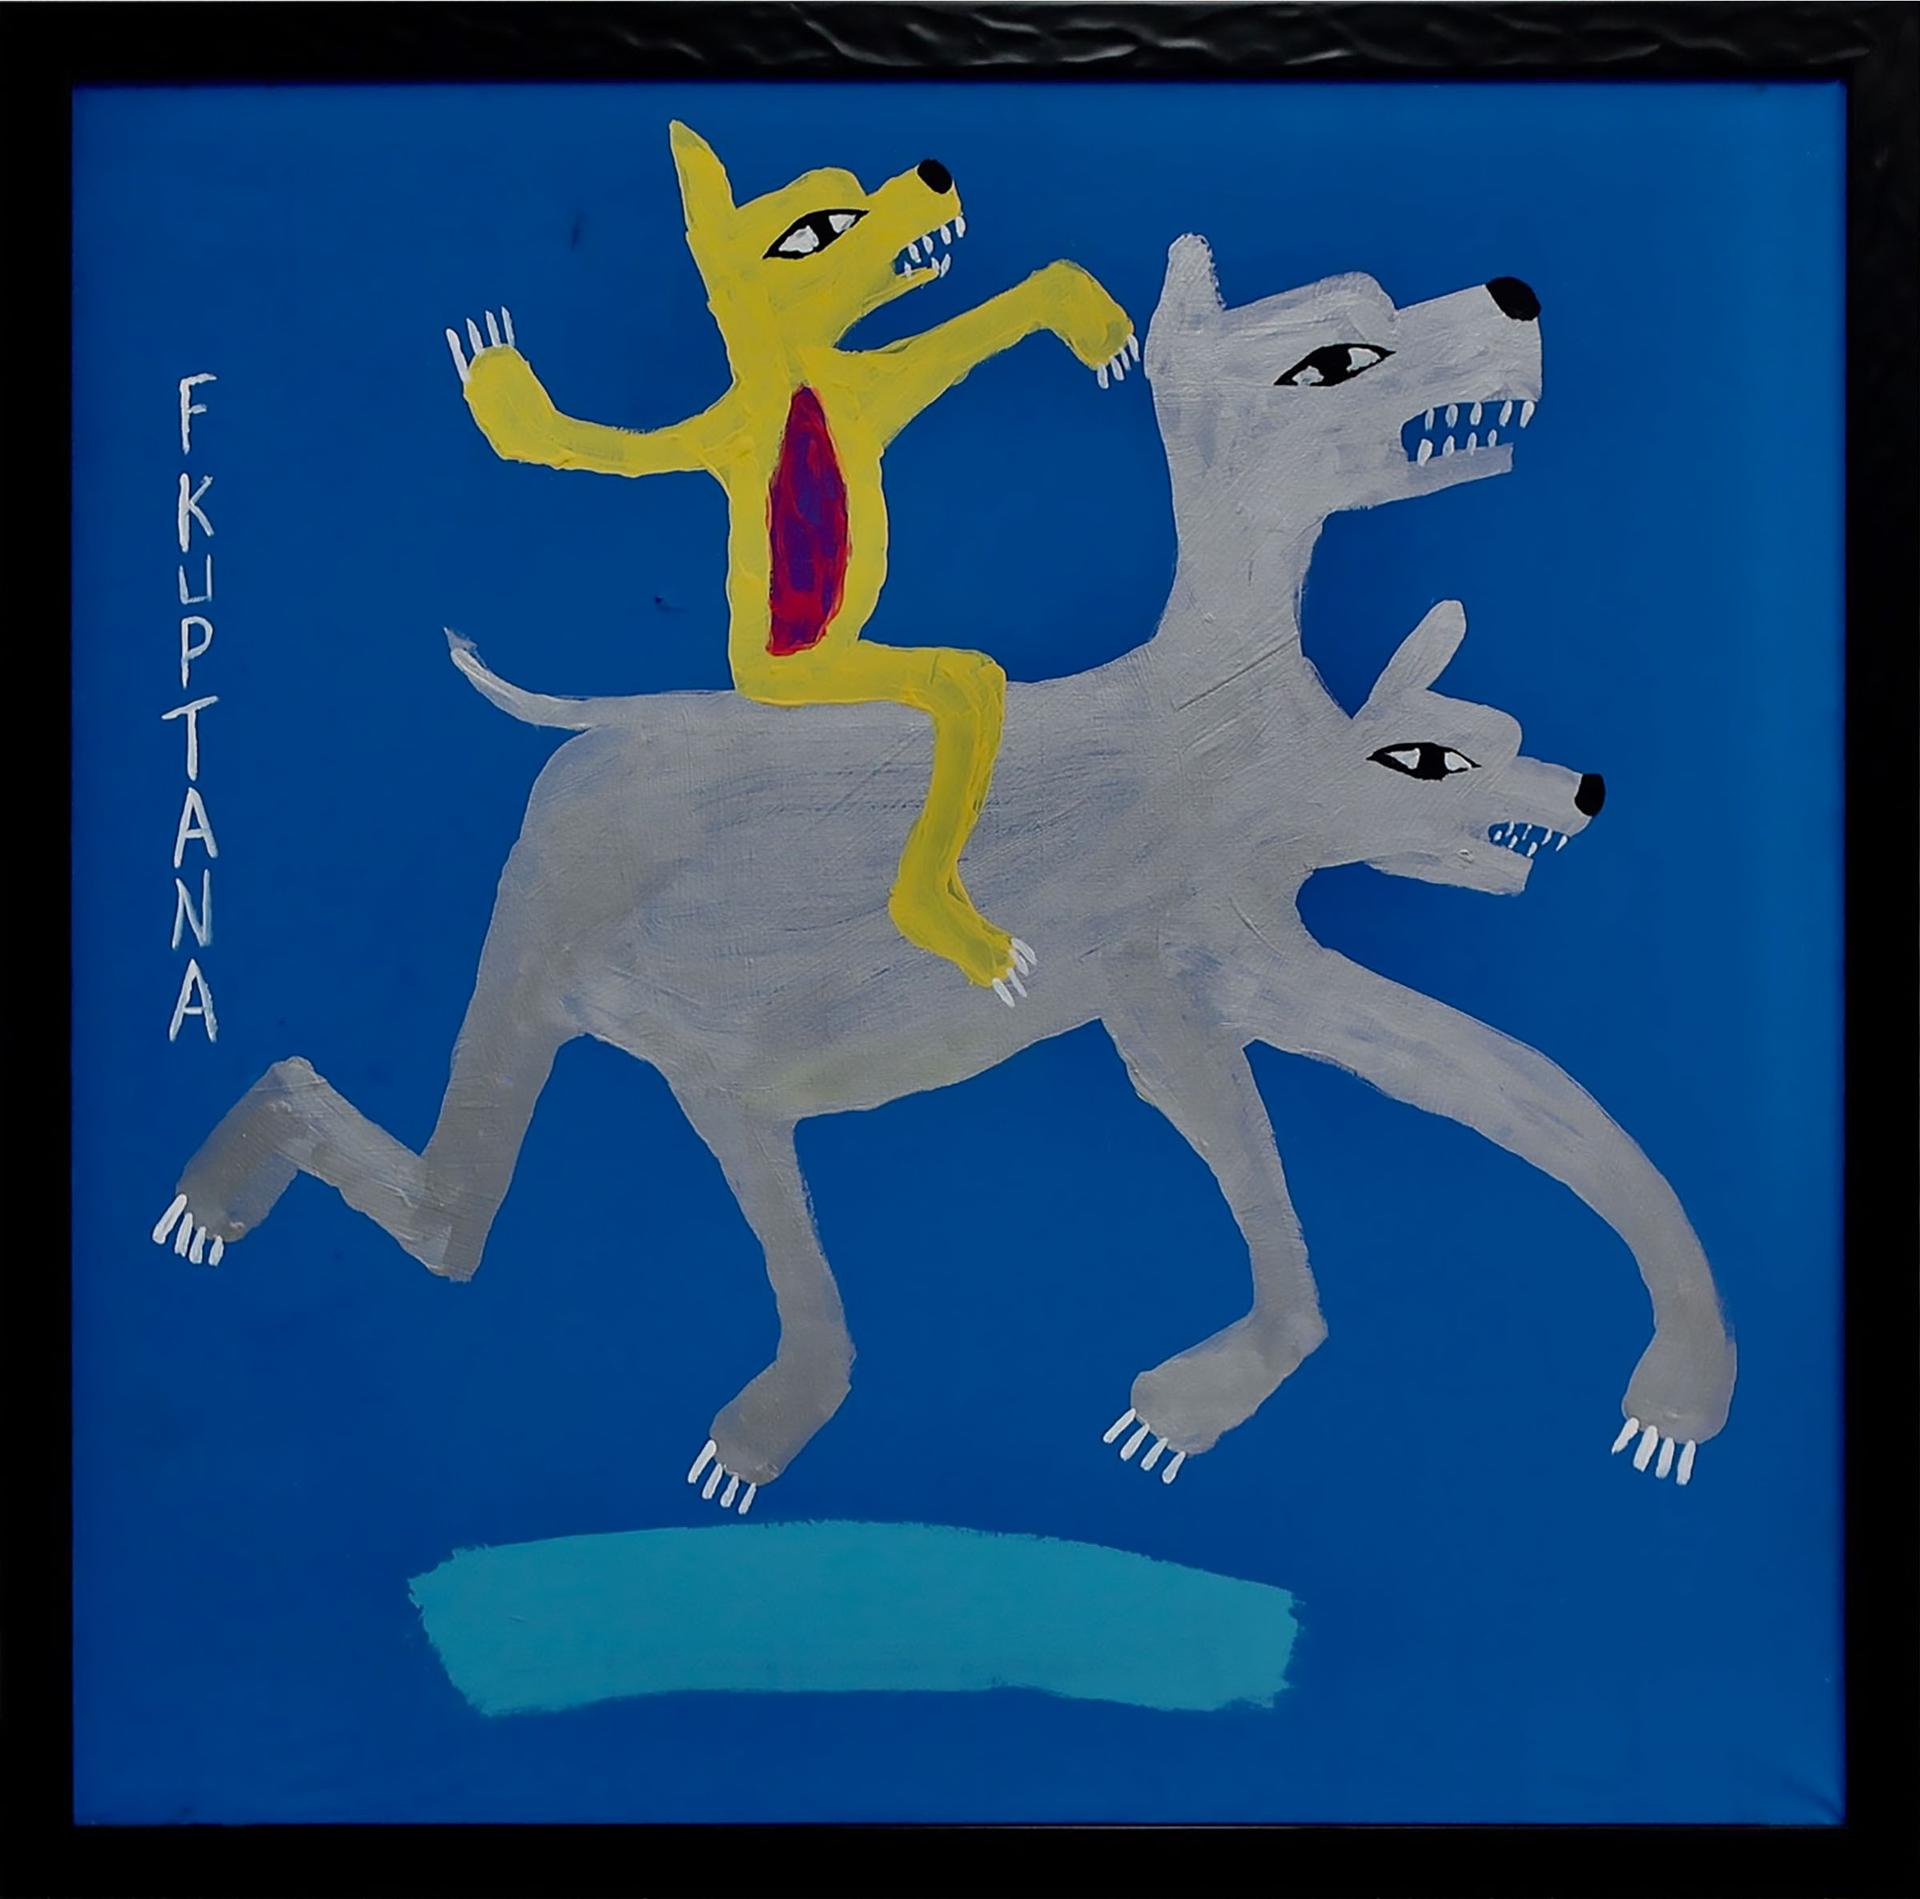 Floyd Kuptana (1964-2021) - Untitled (Rider On Two-Headed Wolf)